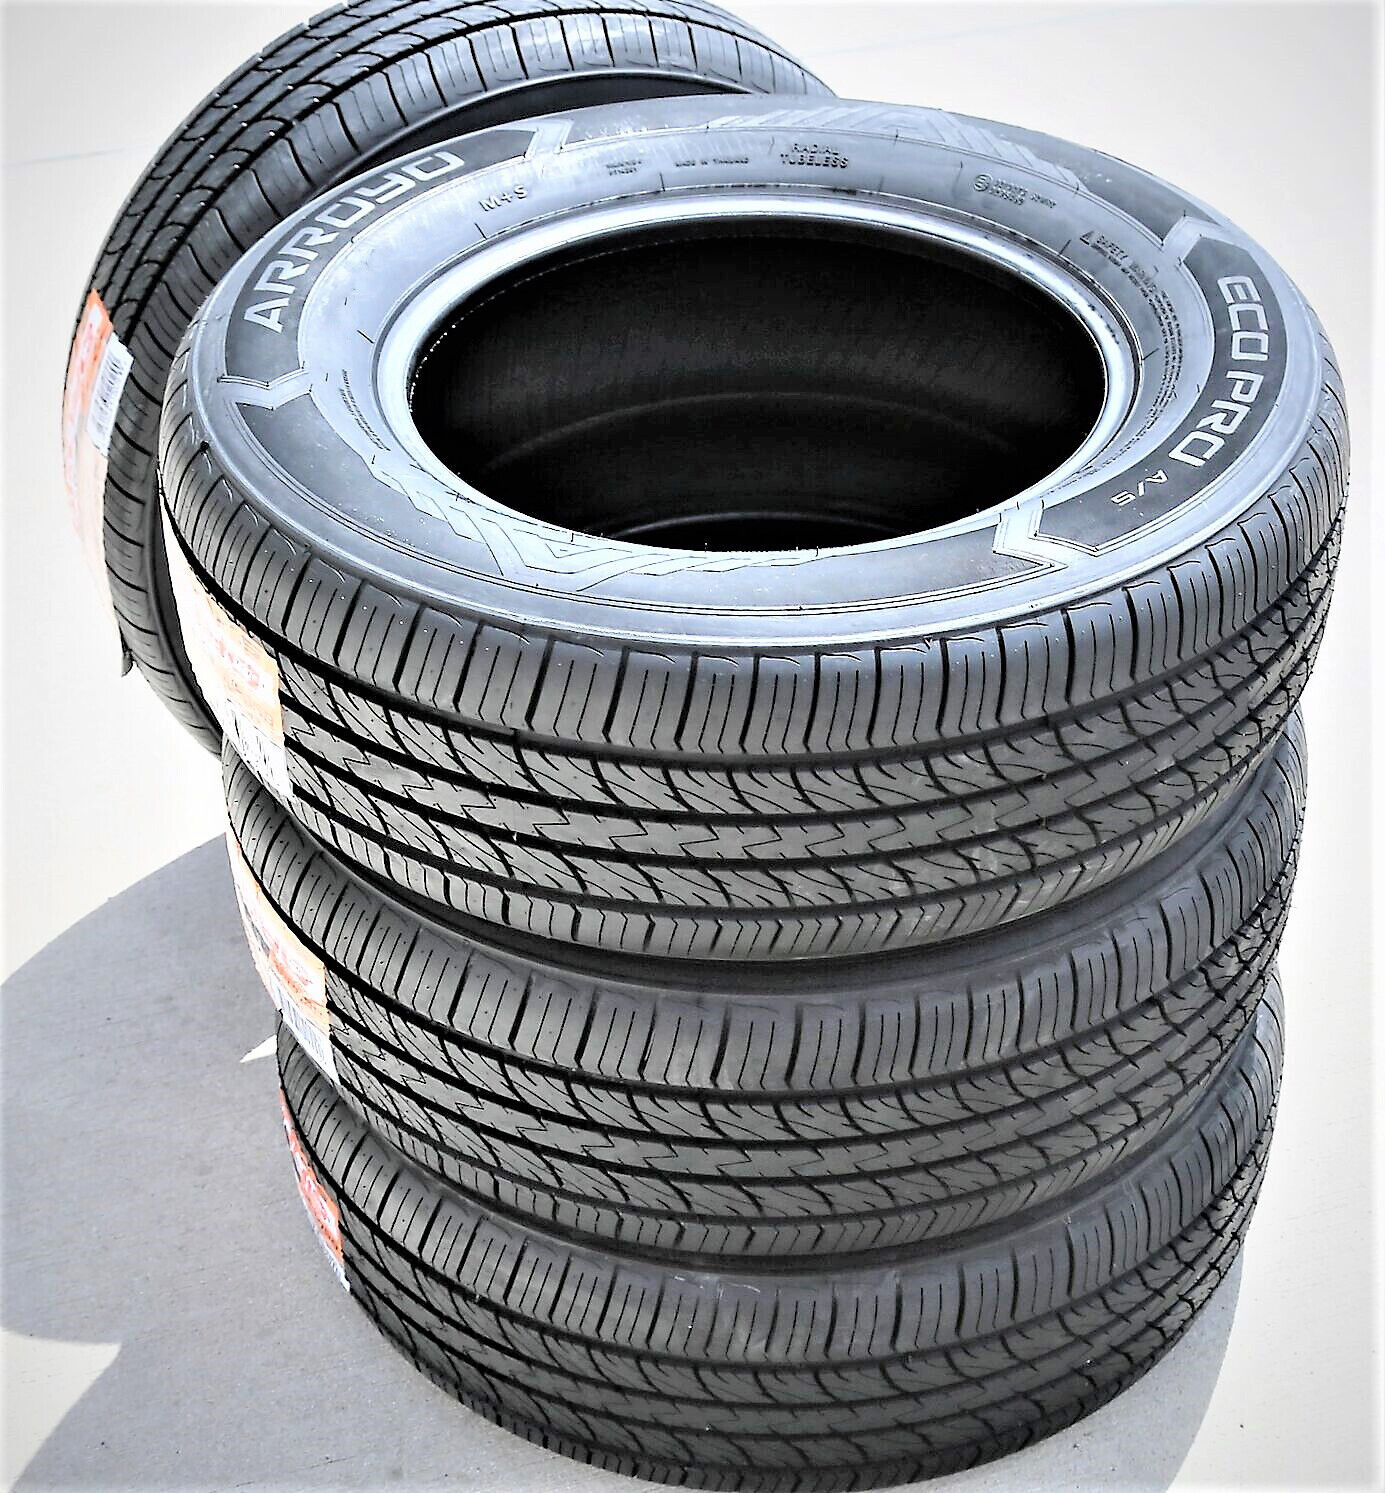 4 Tires Arroyo Eco Pro A/S 205/70R14 98H XL AS All Season